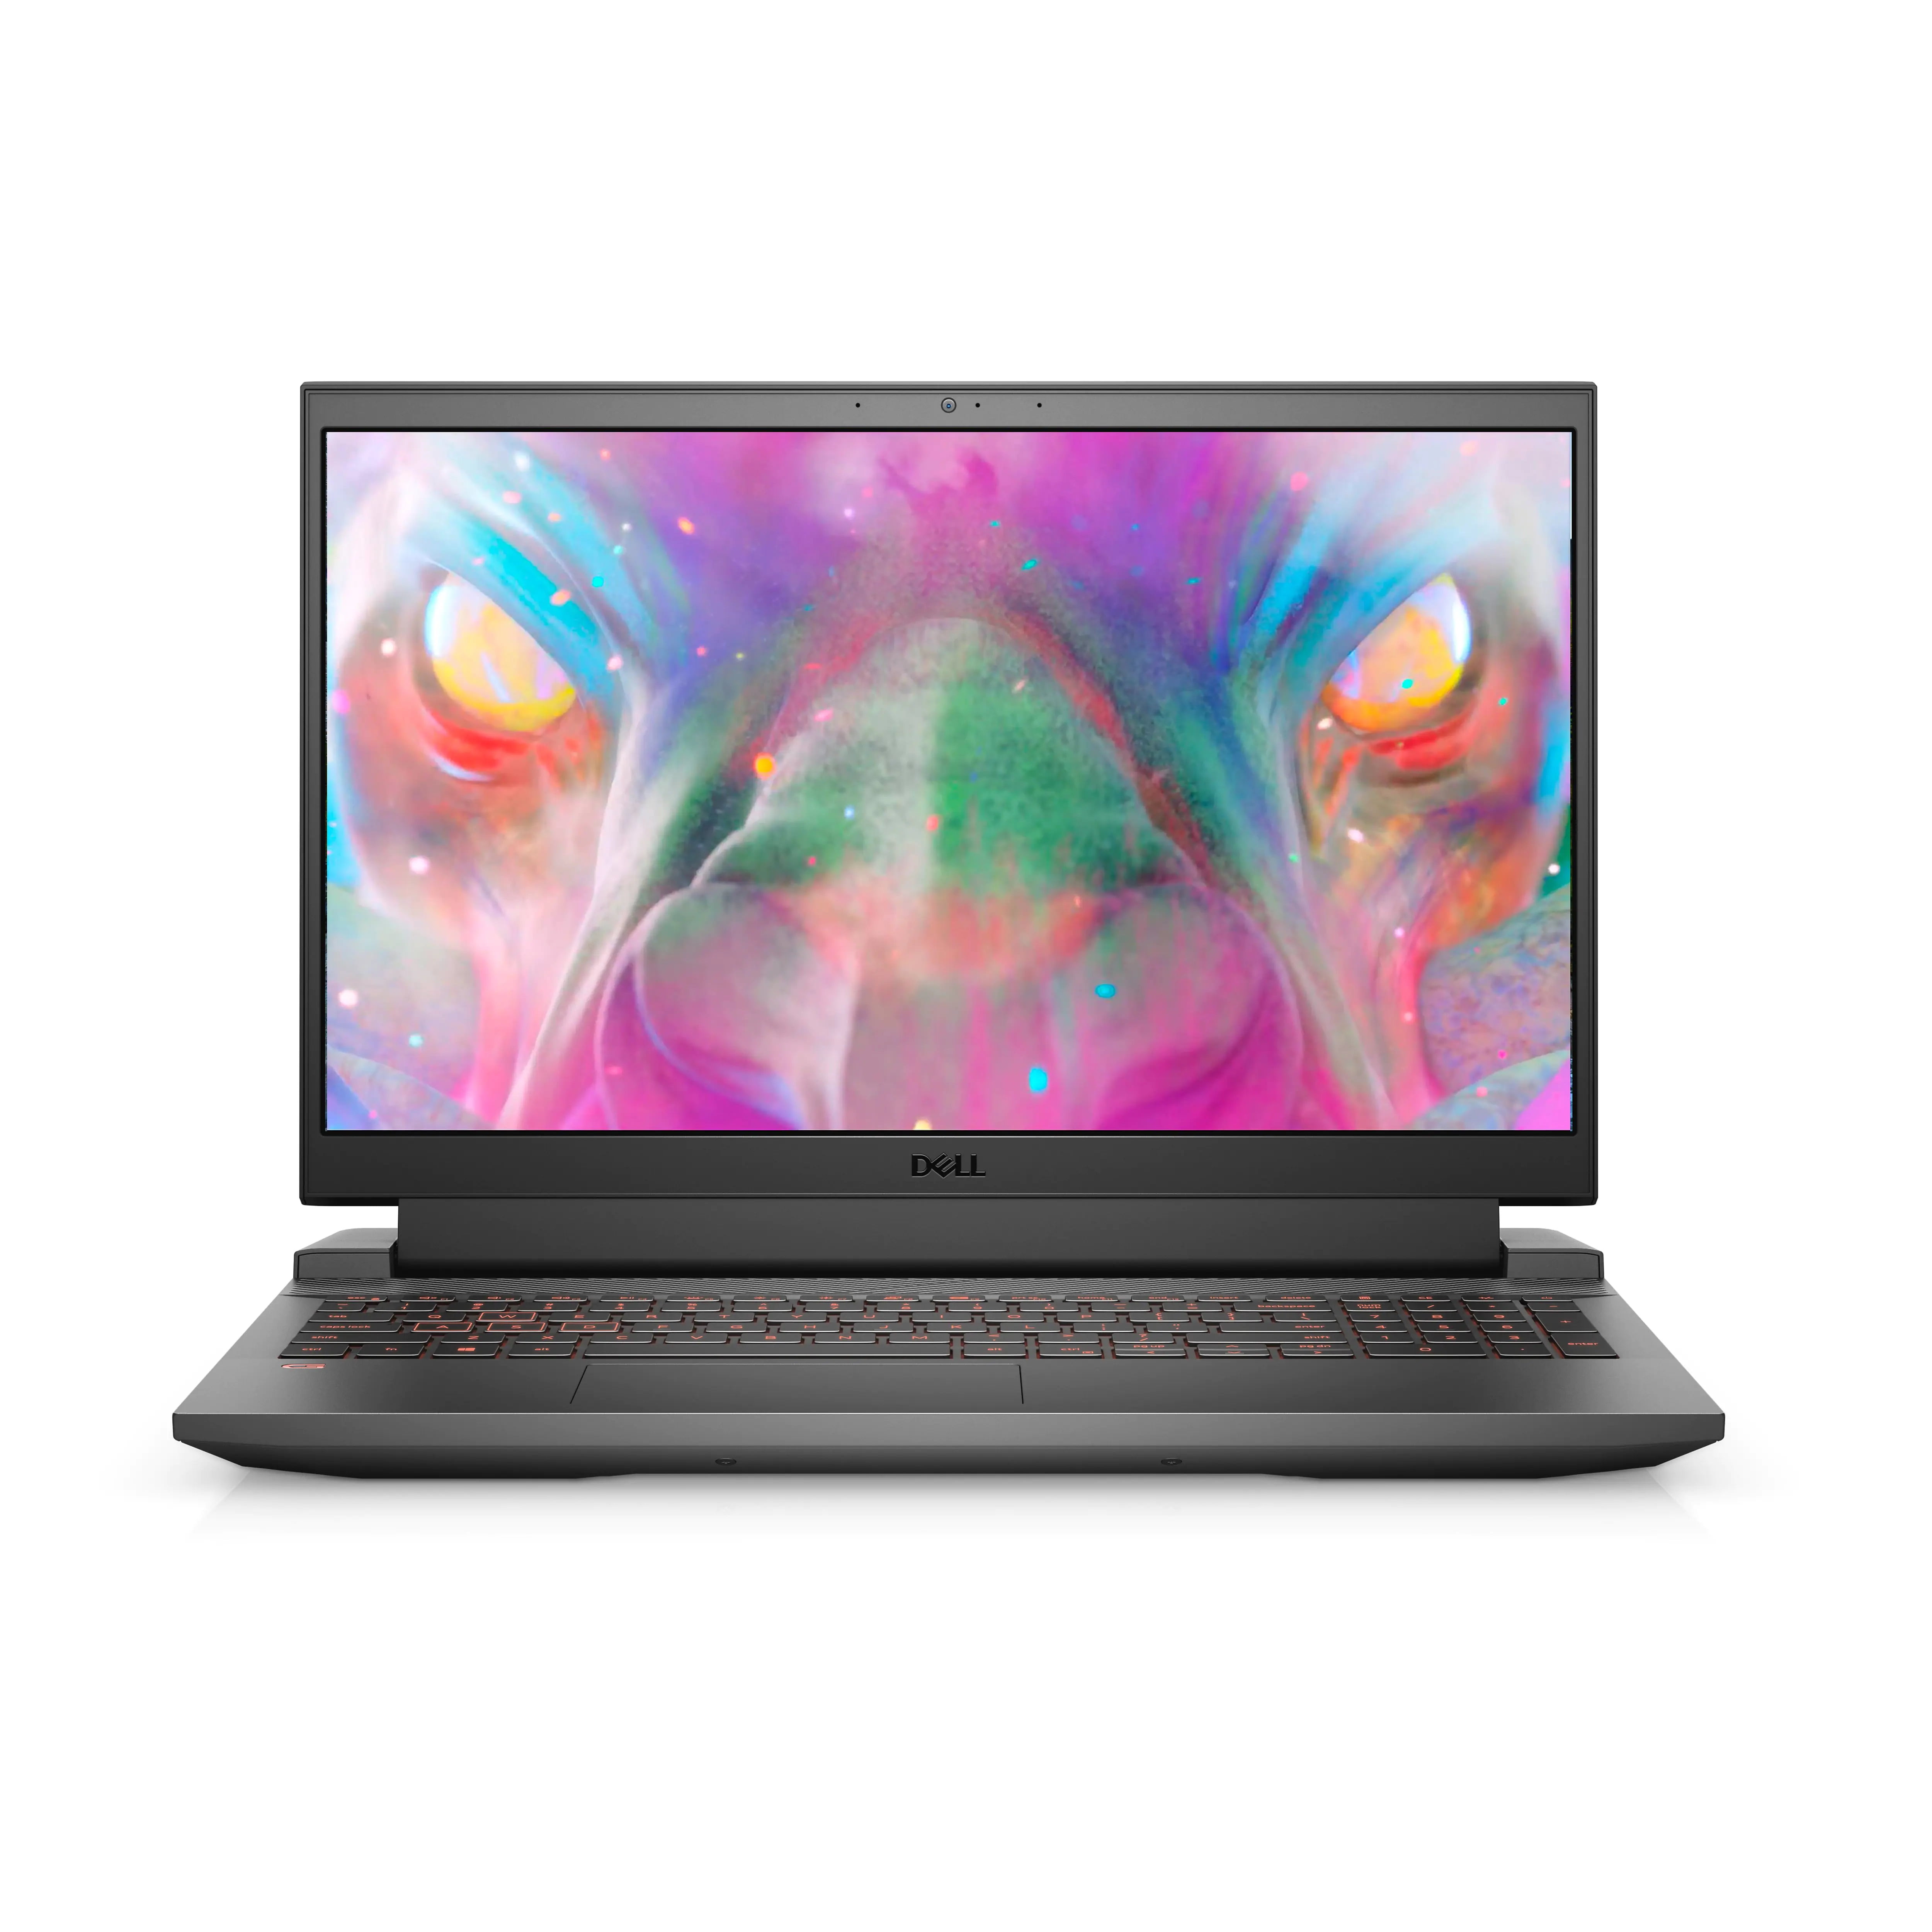 Haas Algebraïsch boerderij Dell G5 15 Gaming Laptop: Core i5-10500H, NVidia GTX 1650, 256GB SSD, 8GB  RAM, 15.6" Full HD 120Hz Display - Walmart.com